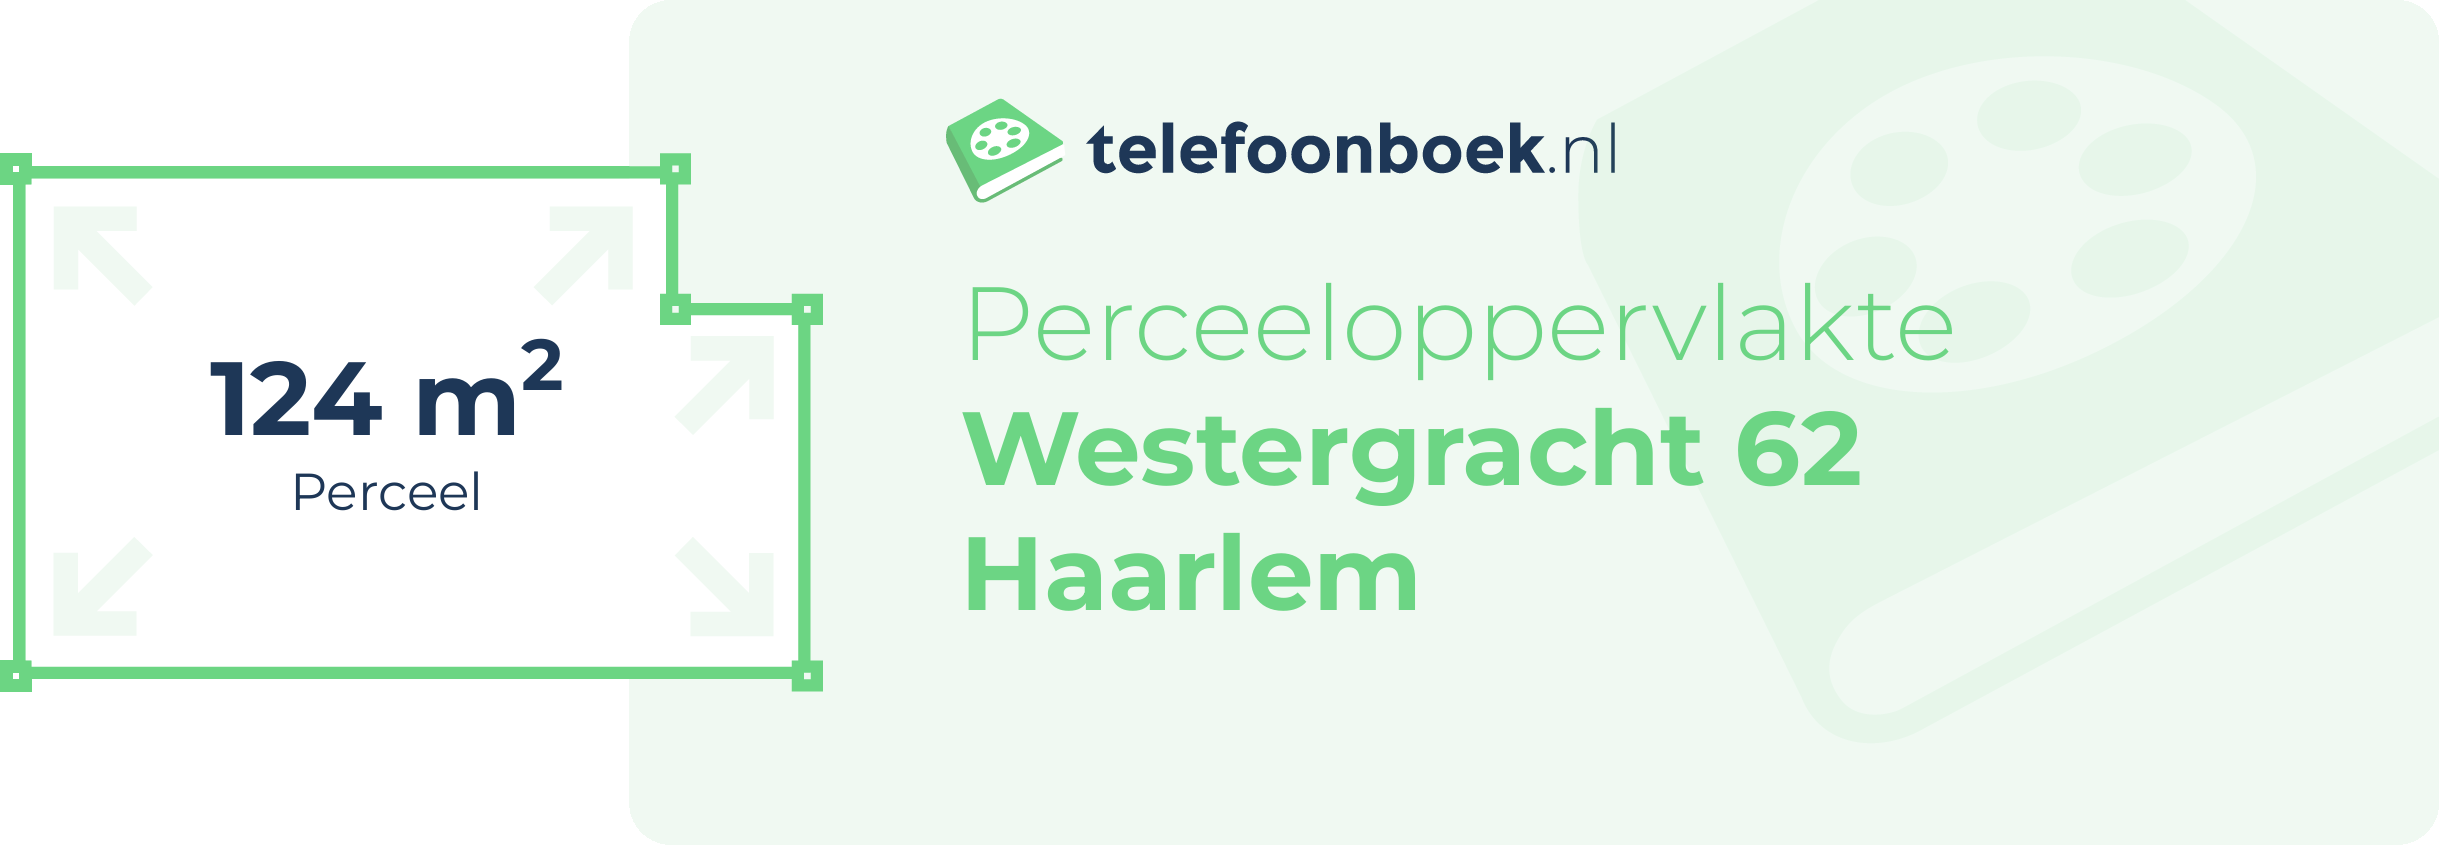 Perceeloppervlakte Westergracht 62 Haarlem